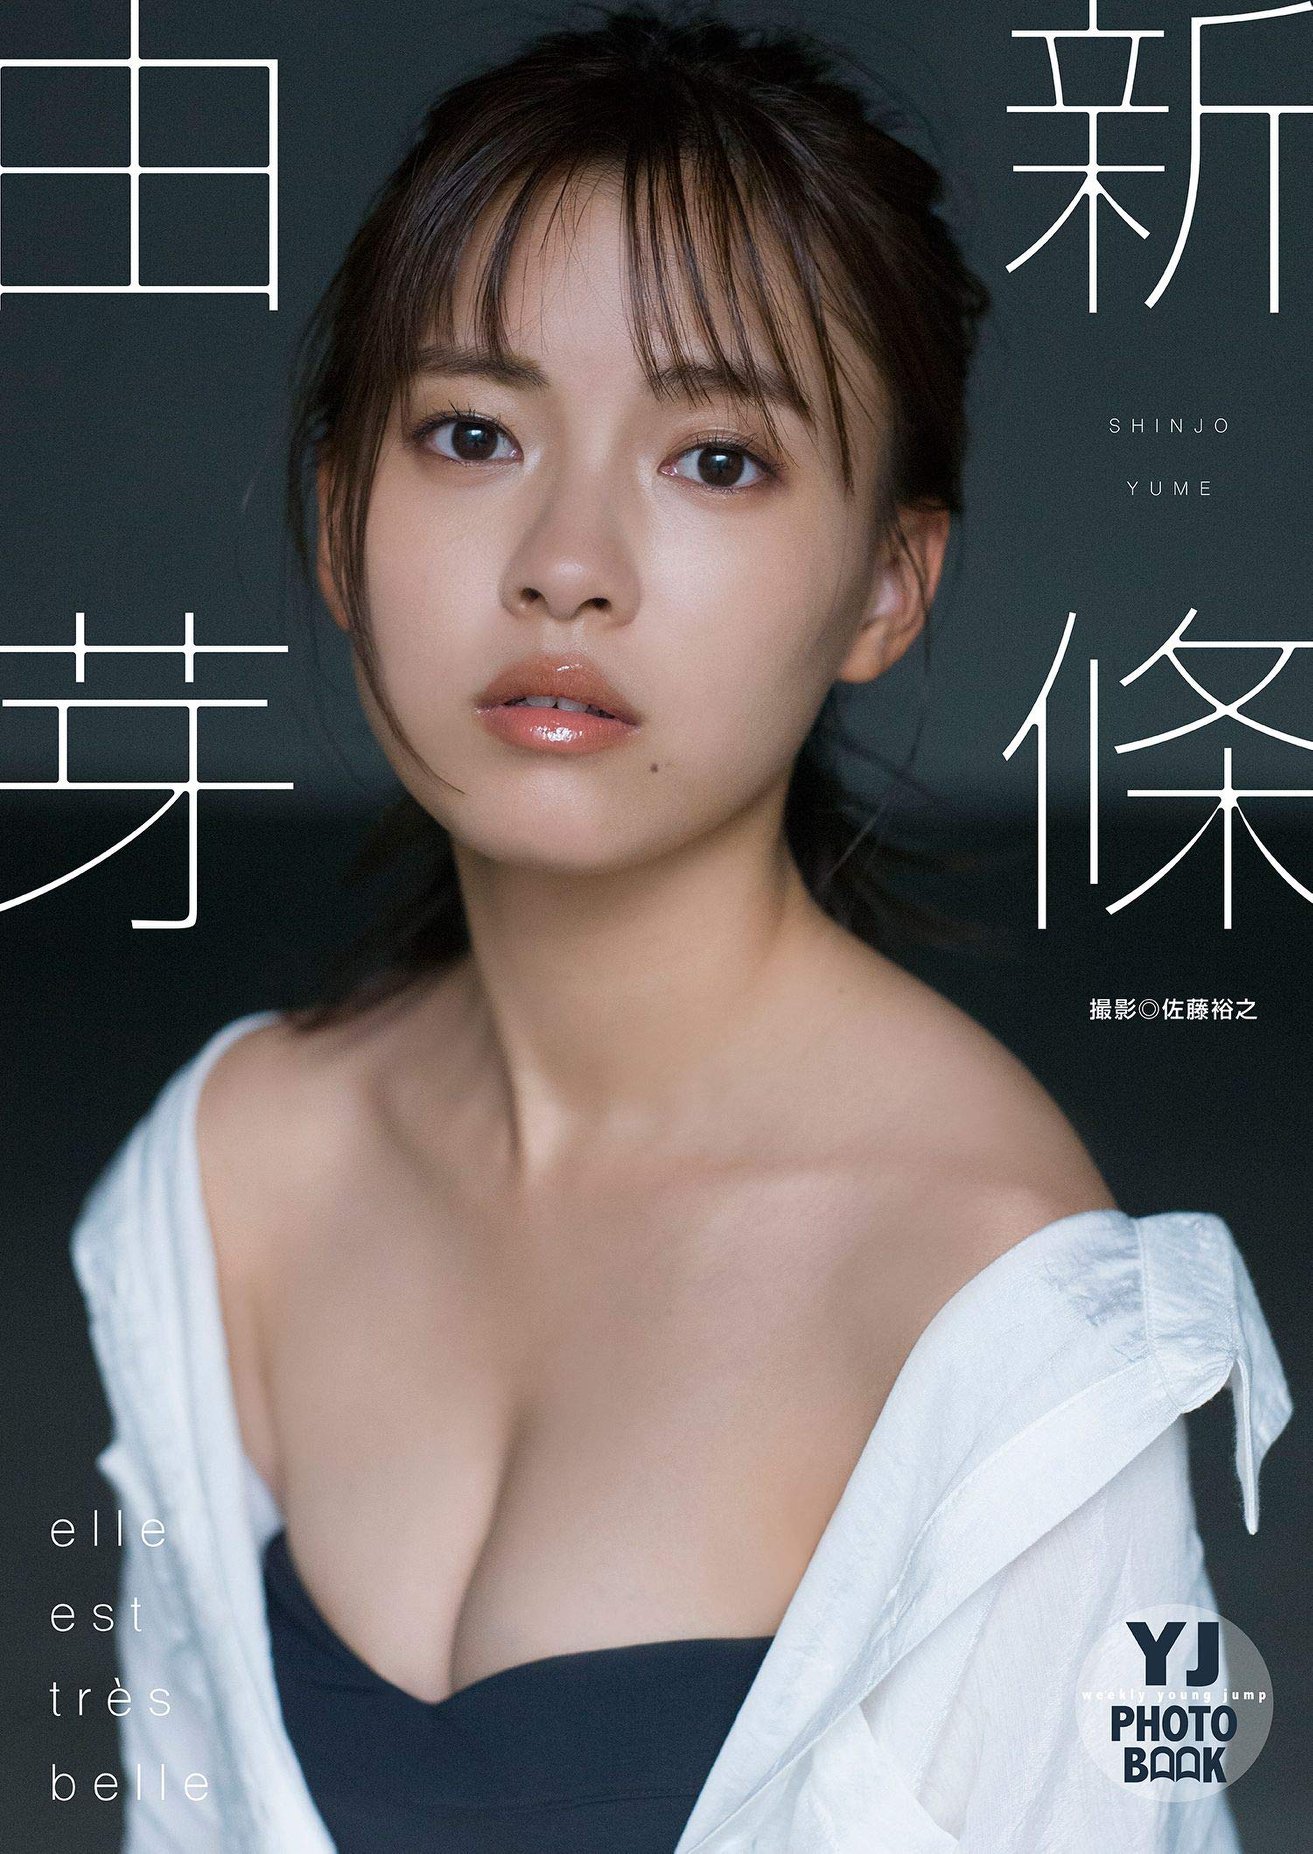 Yume Shinjo 新條由芽, デジタル限定 YJ Photo Book 「Elle est très belle」